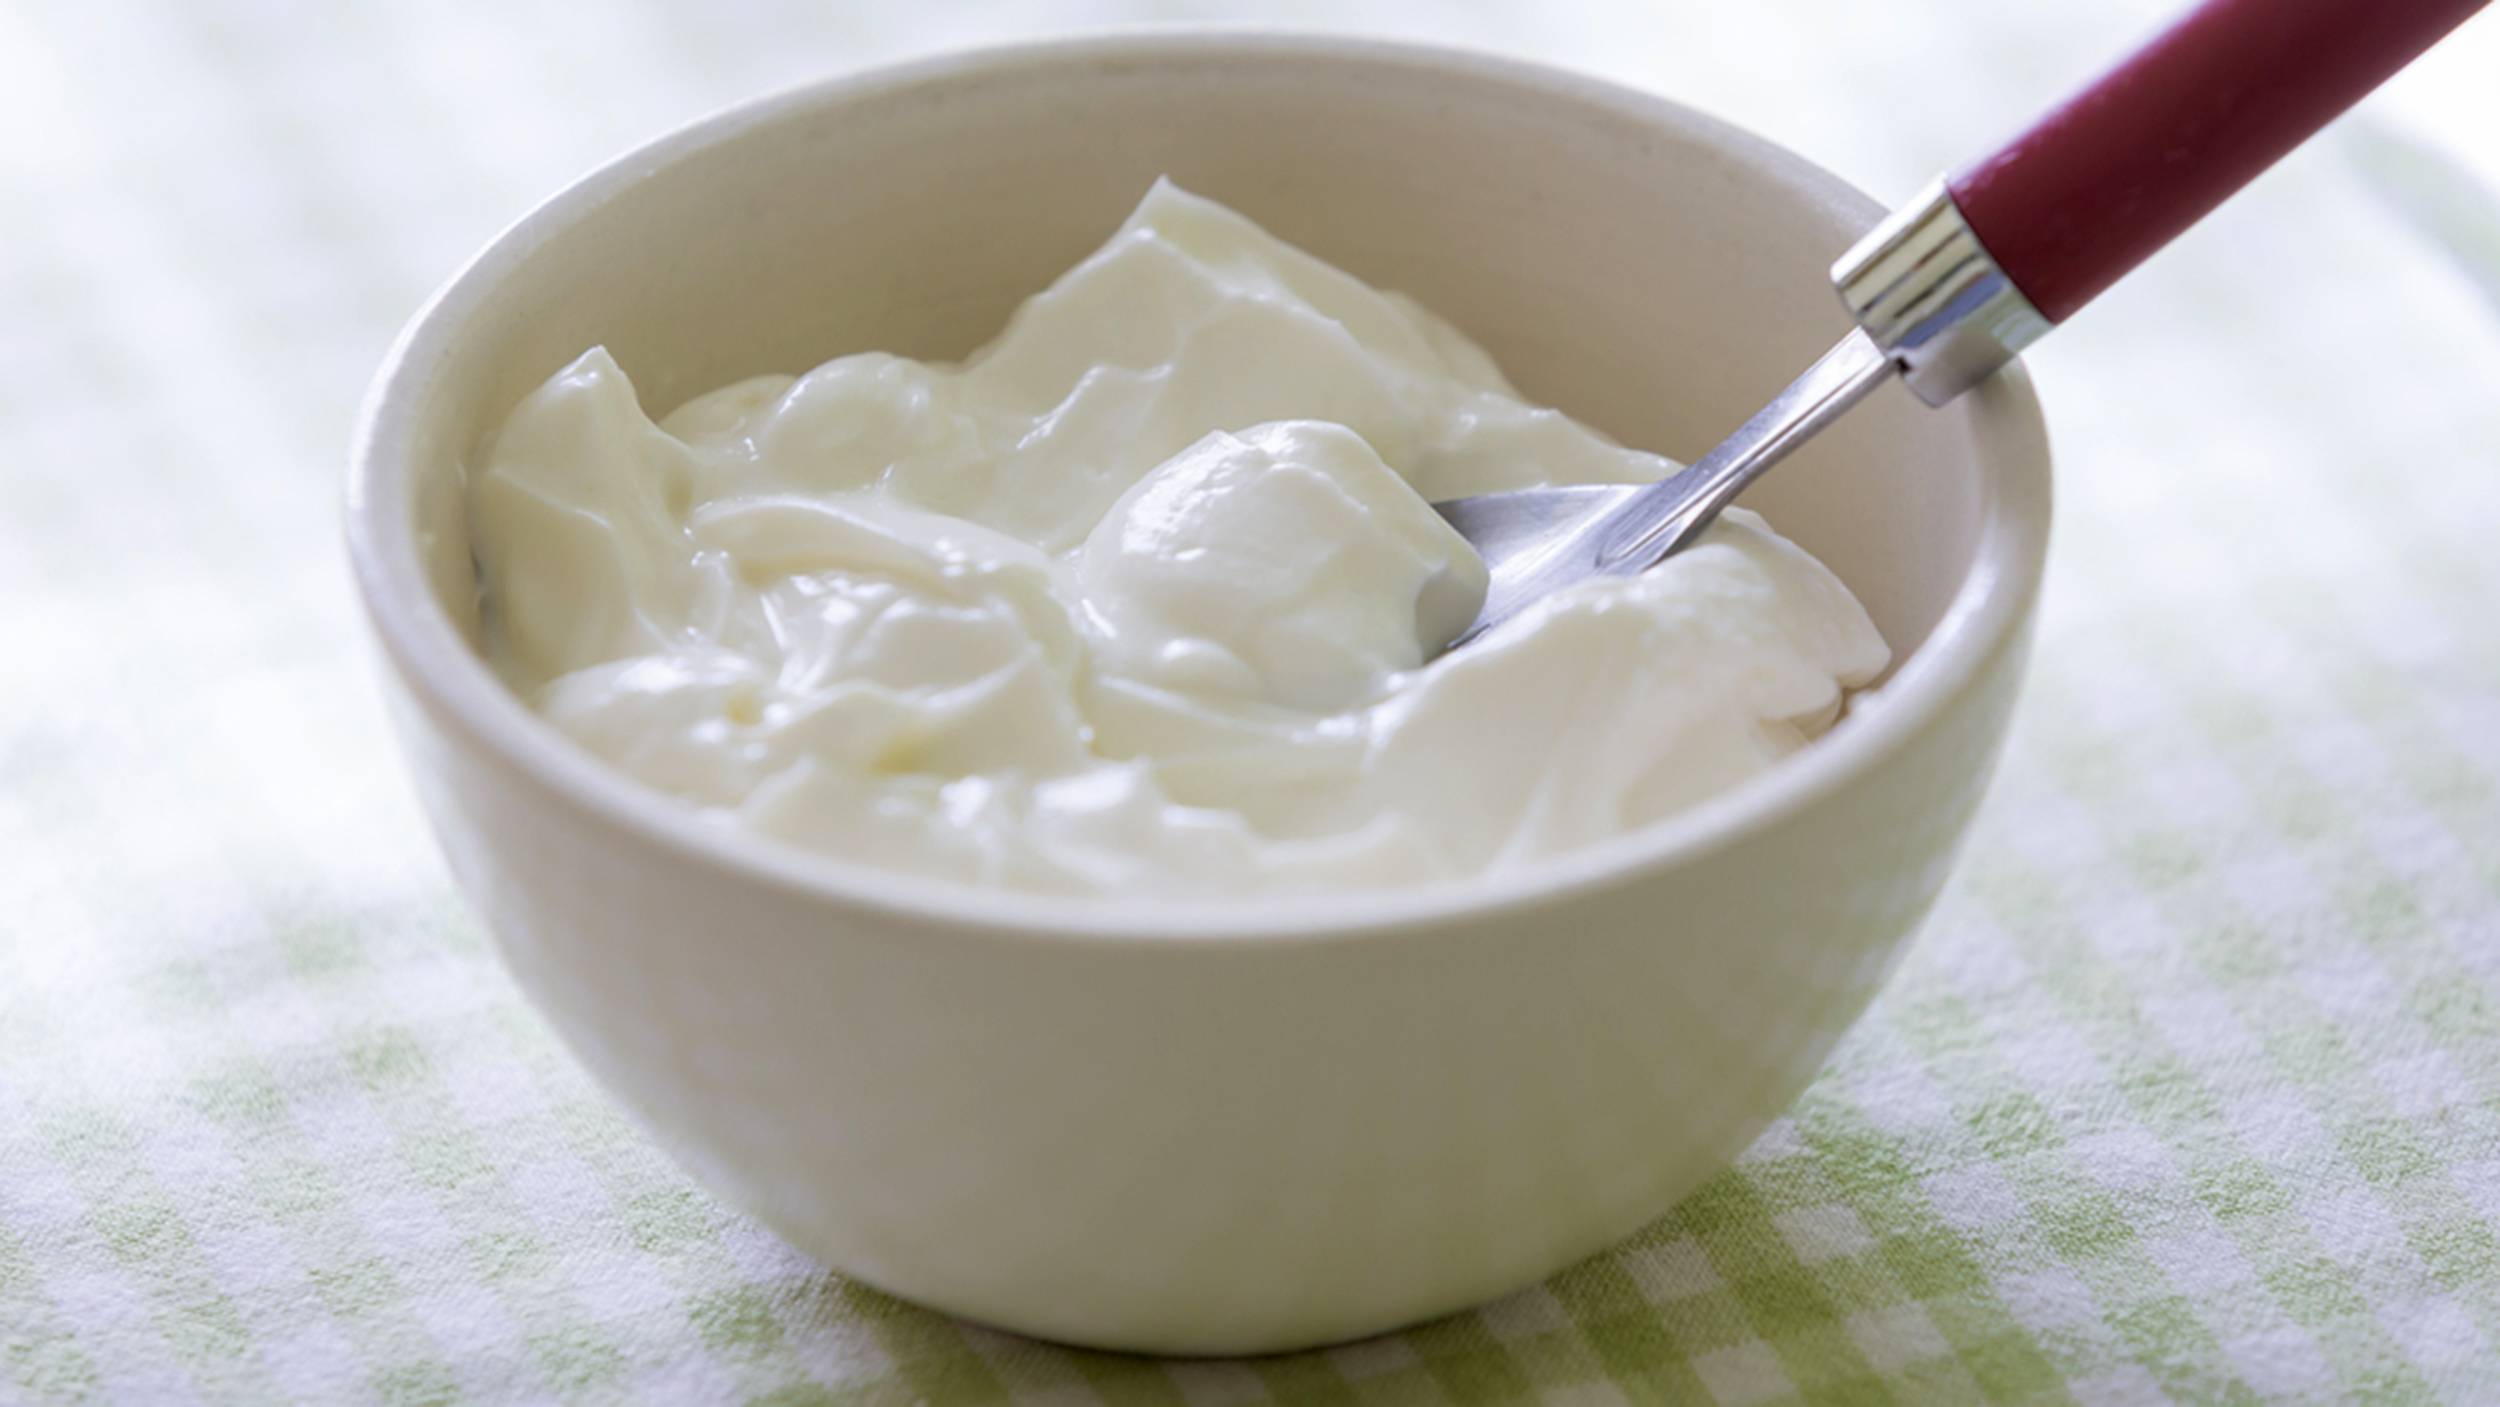 yogurt 